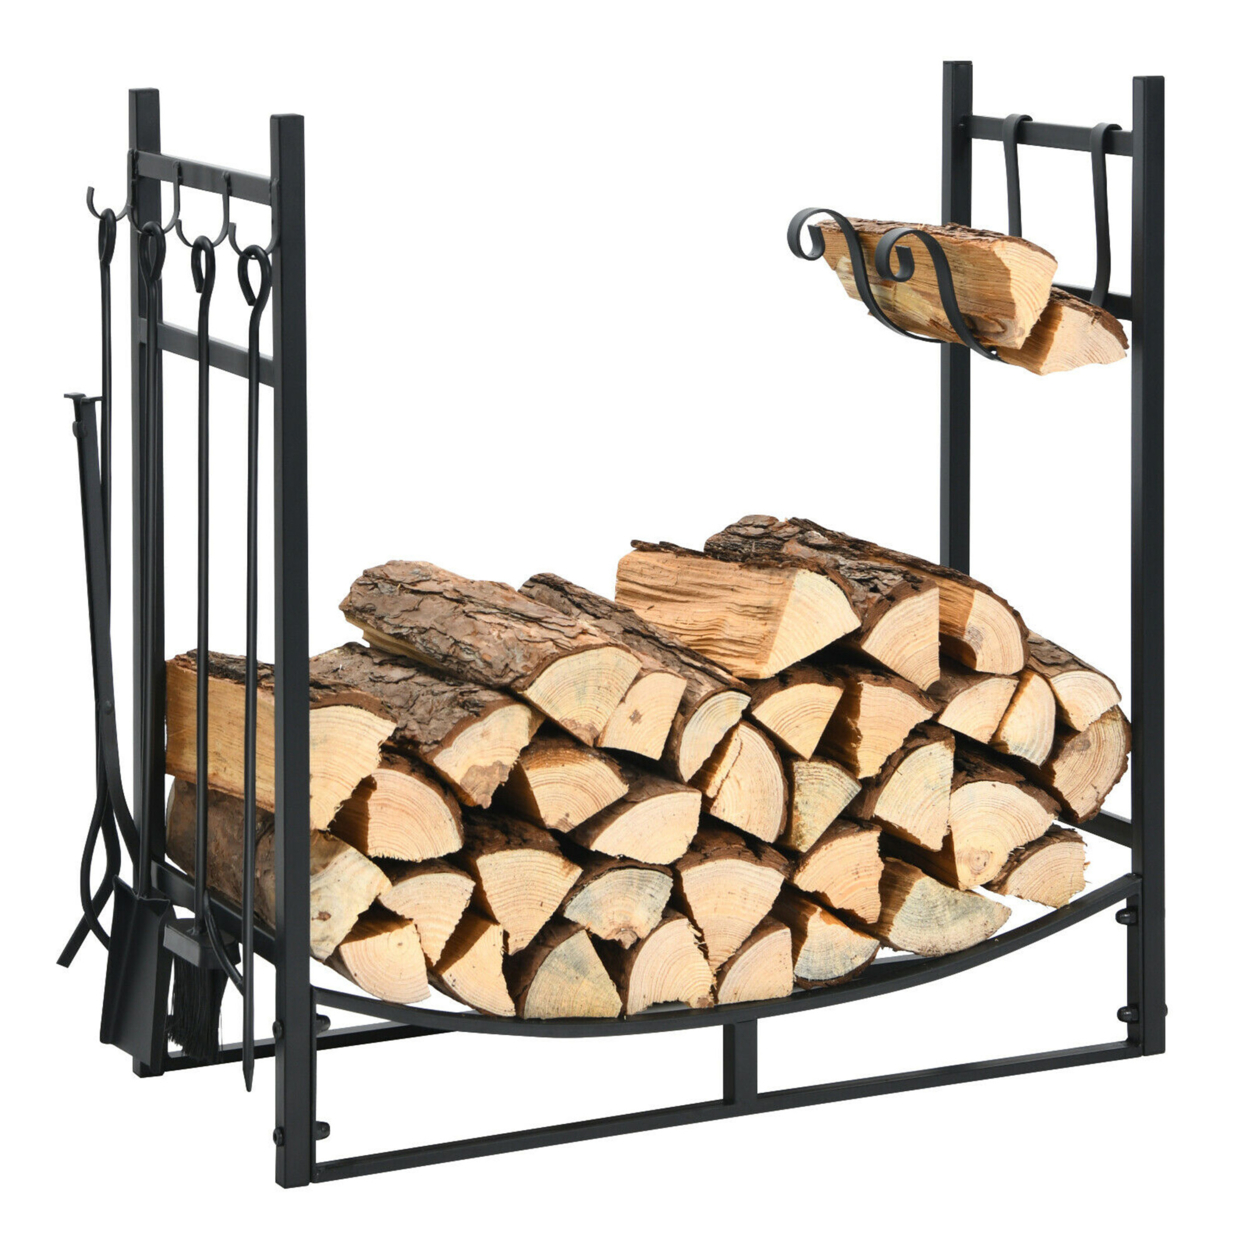 30'' Firewood Rack W/4 Tool Set Kindling Holders For Indoor & Outdoor